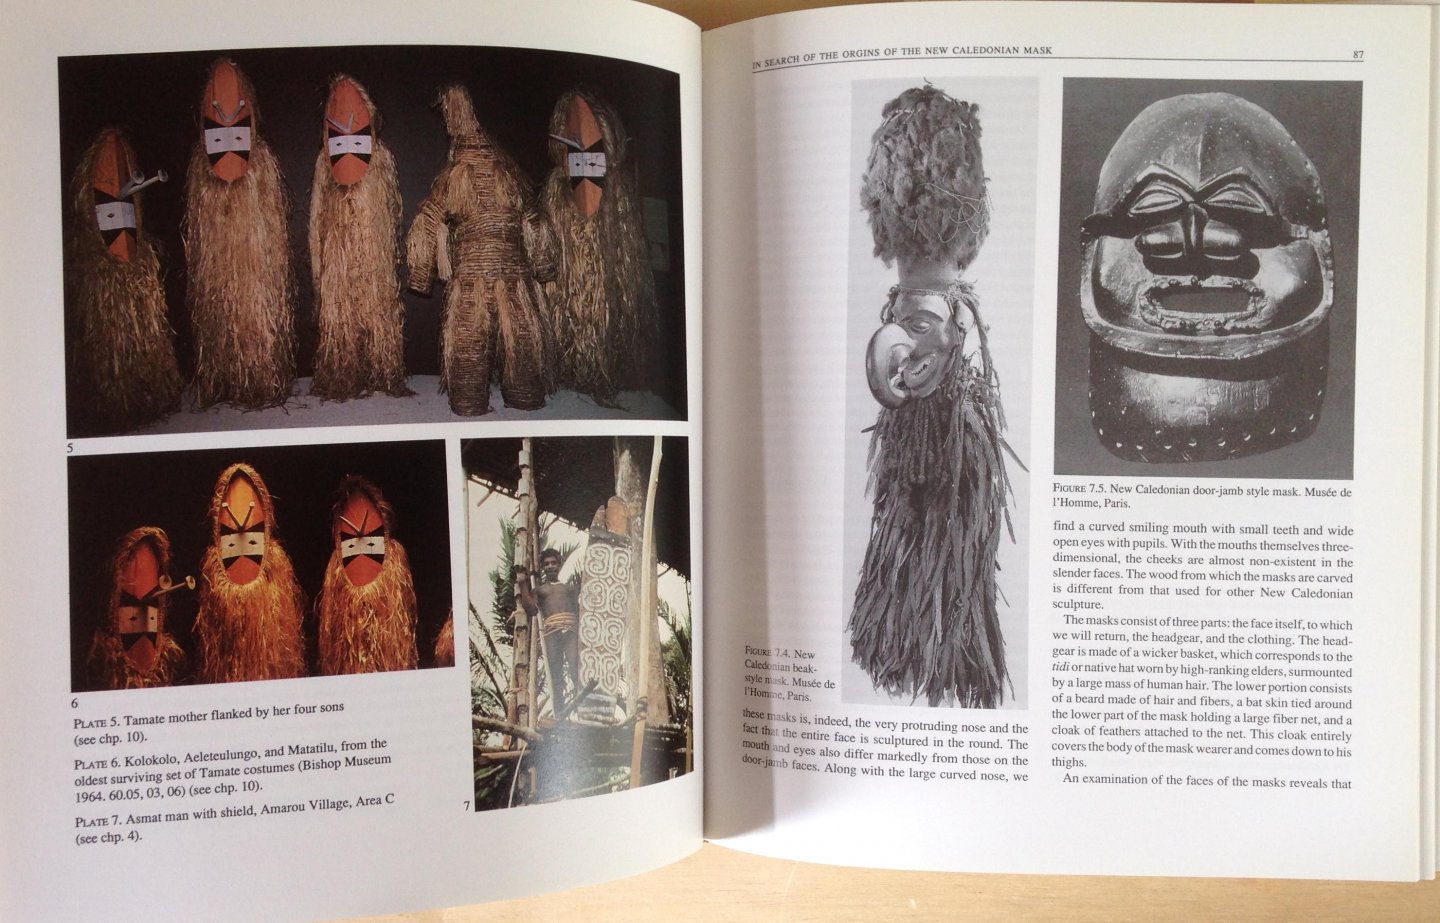 Hanson, Allan & Louise Hanson (eds.) - Art and Identity in Oceania